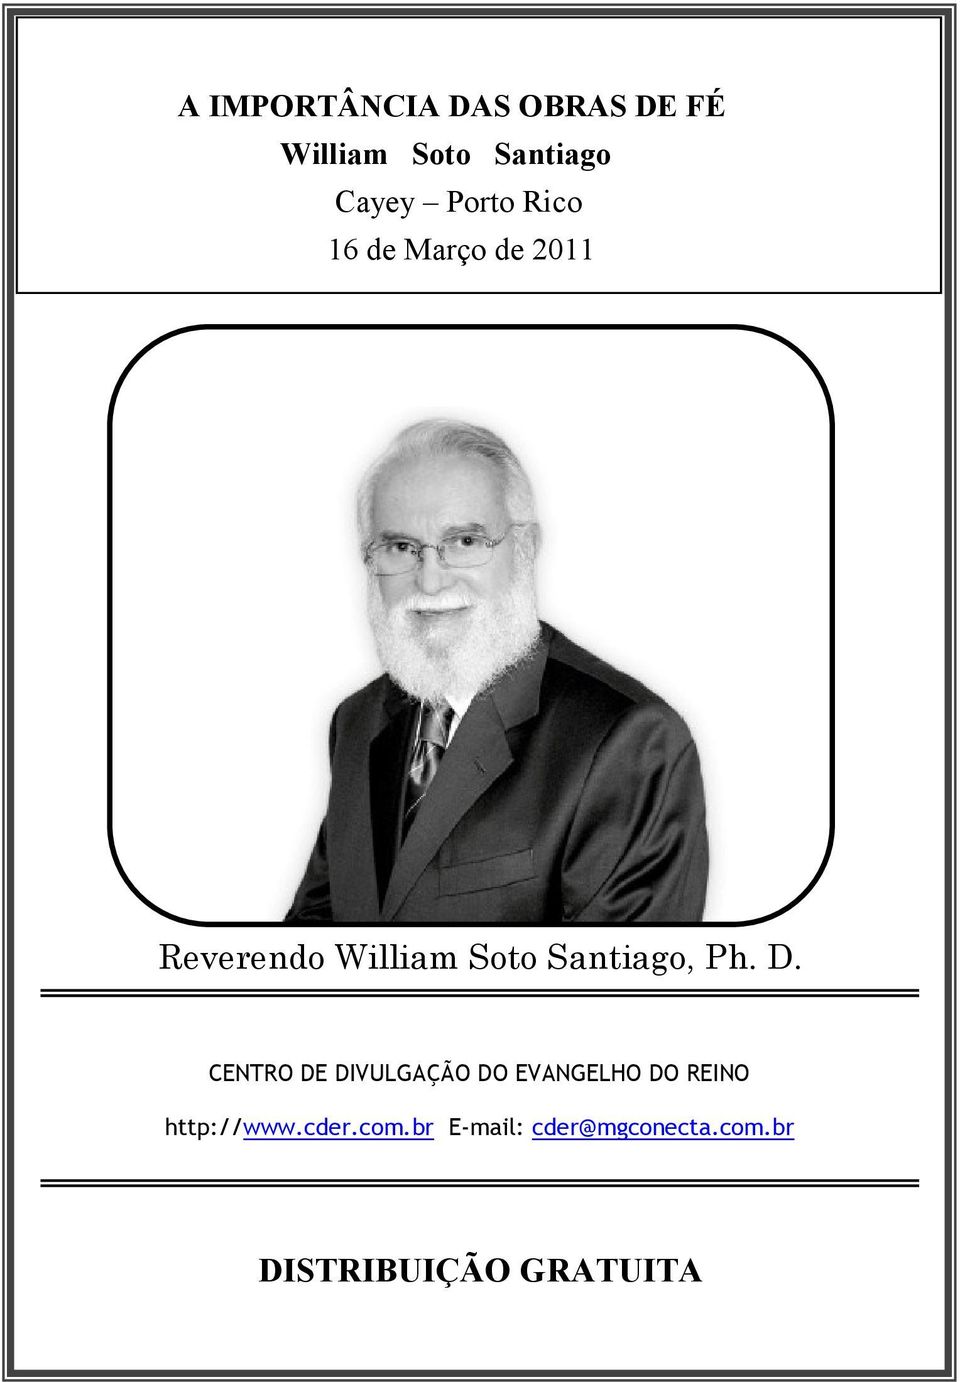 Santiago, Ph. D.